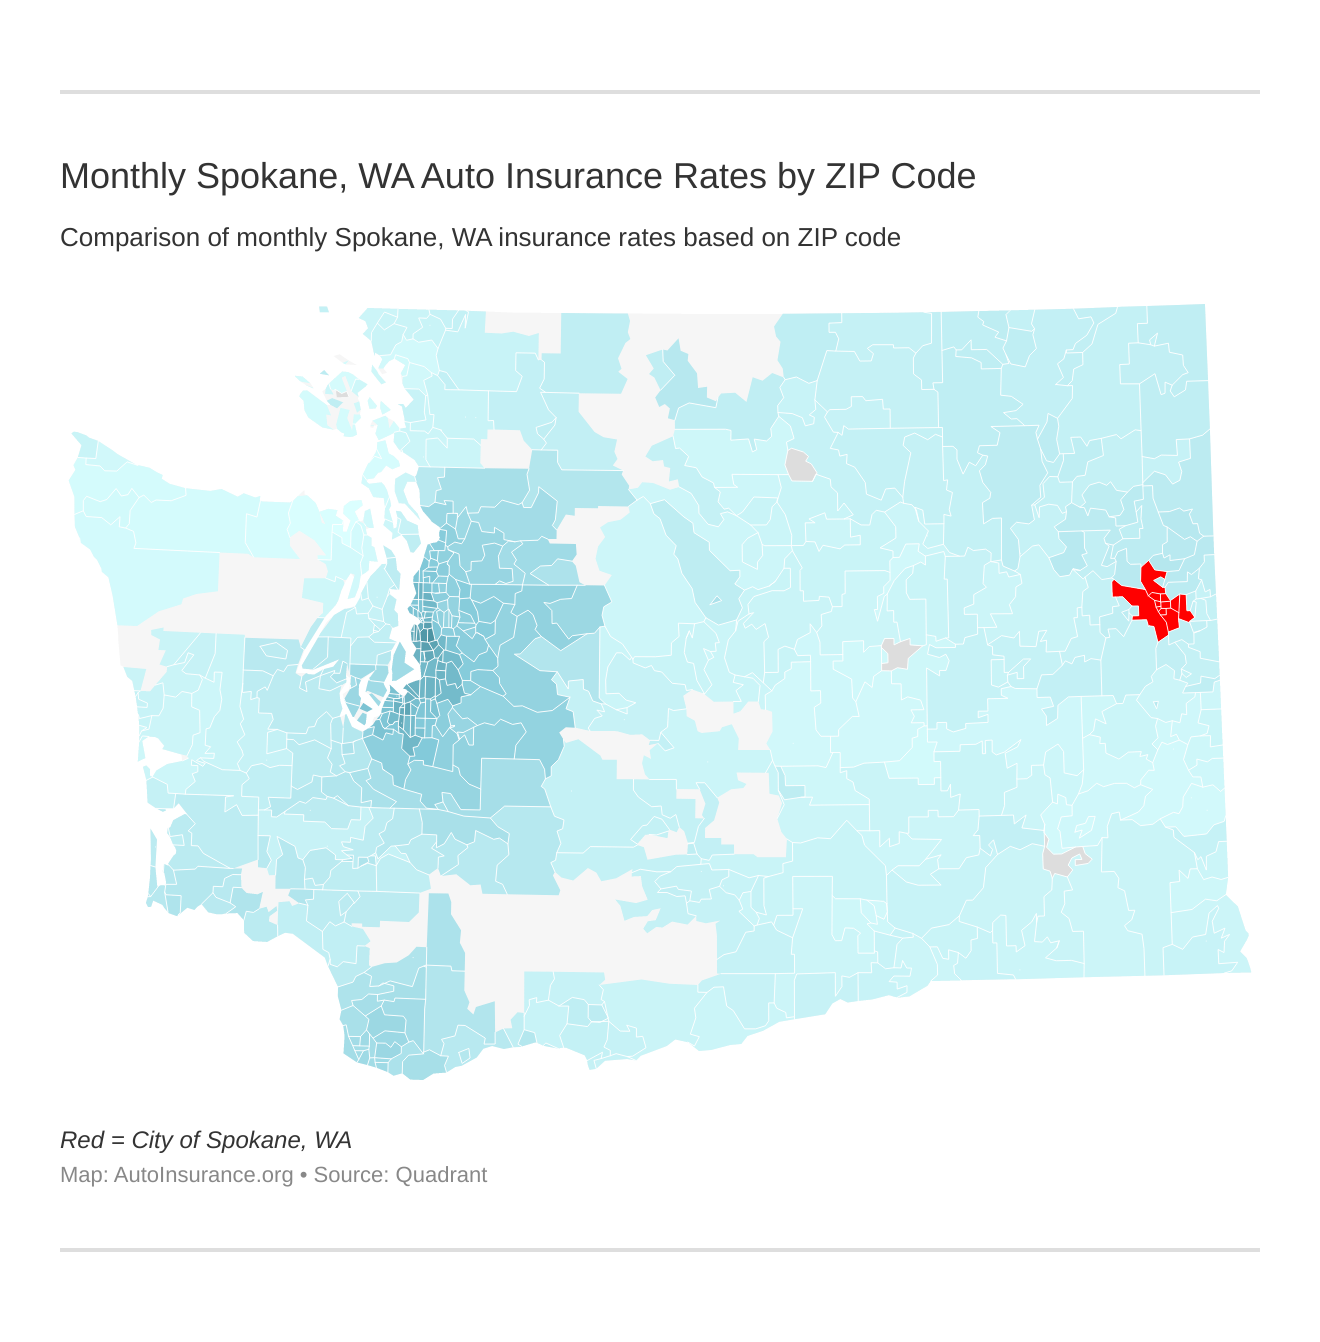 Monthly Spokane, WA Auto Insurance Rates by ZIP Code